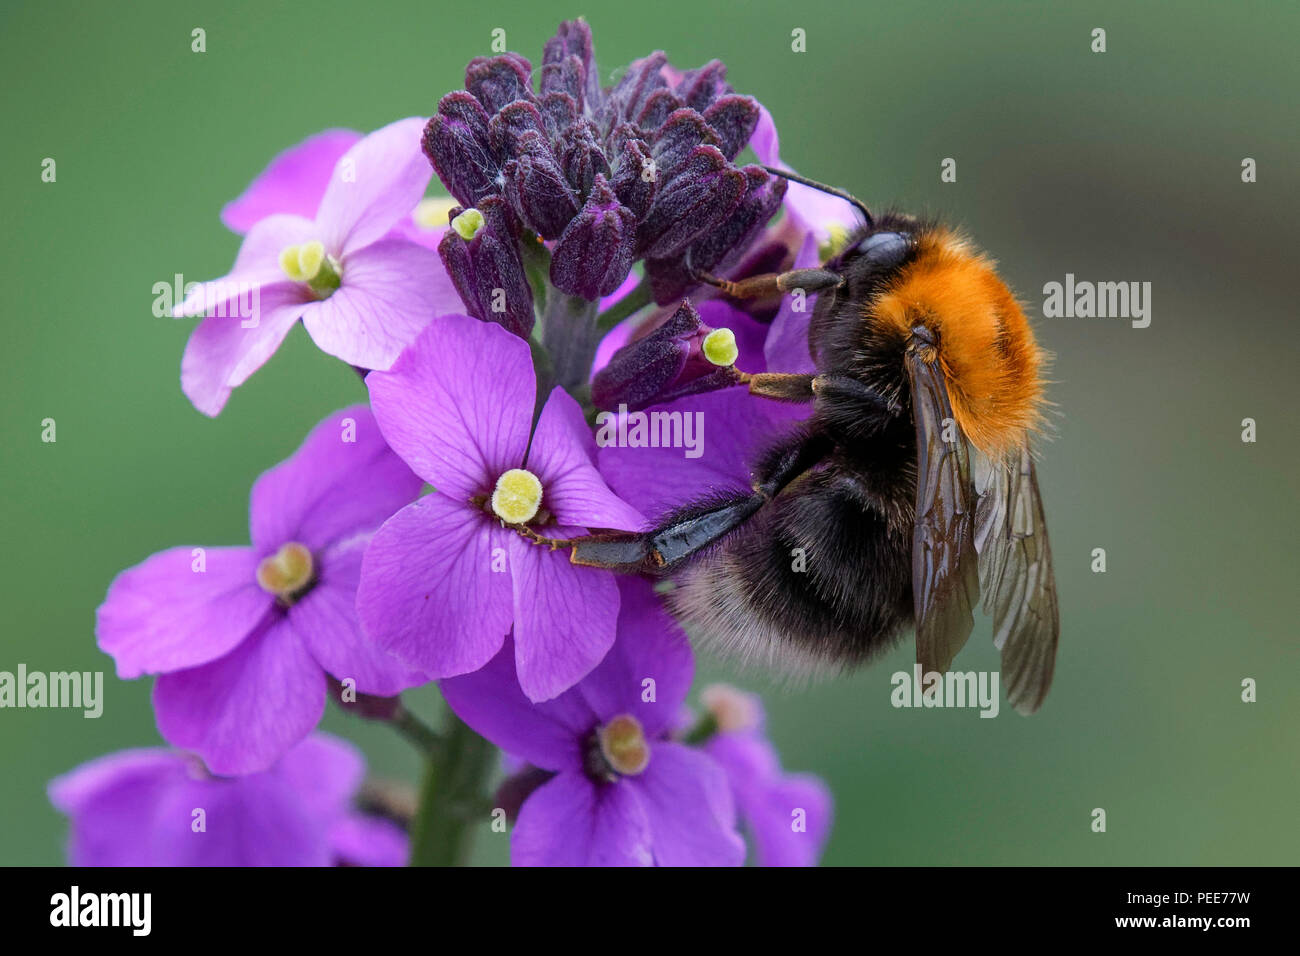 Tree Bumblebee feeding on Erysimum 'Bowles Mauve' flowers Stock Photo